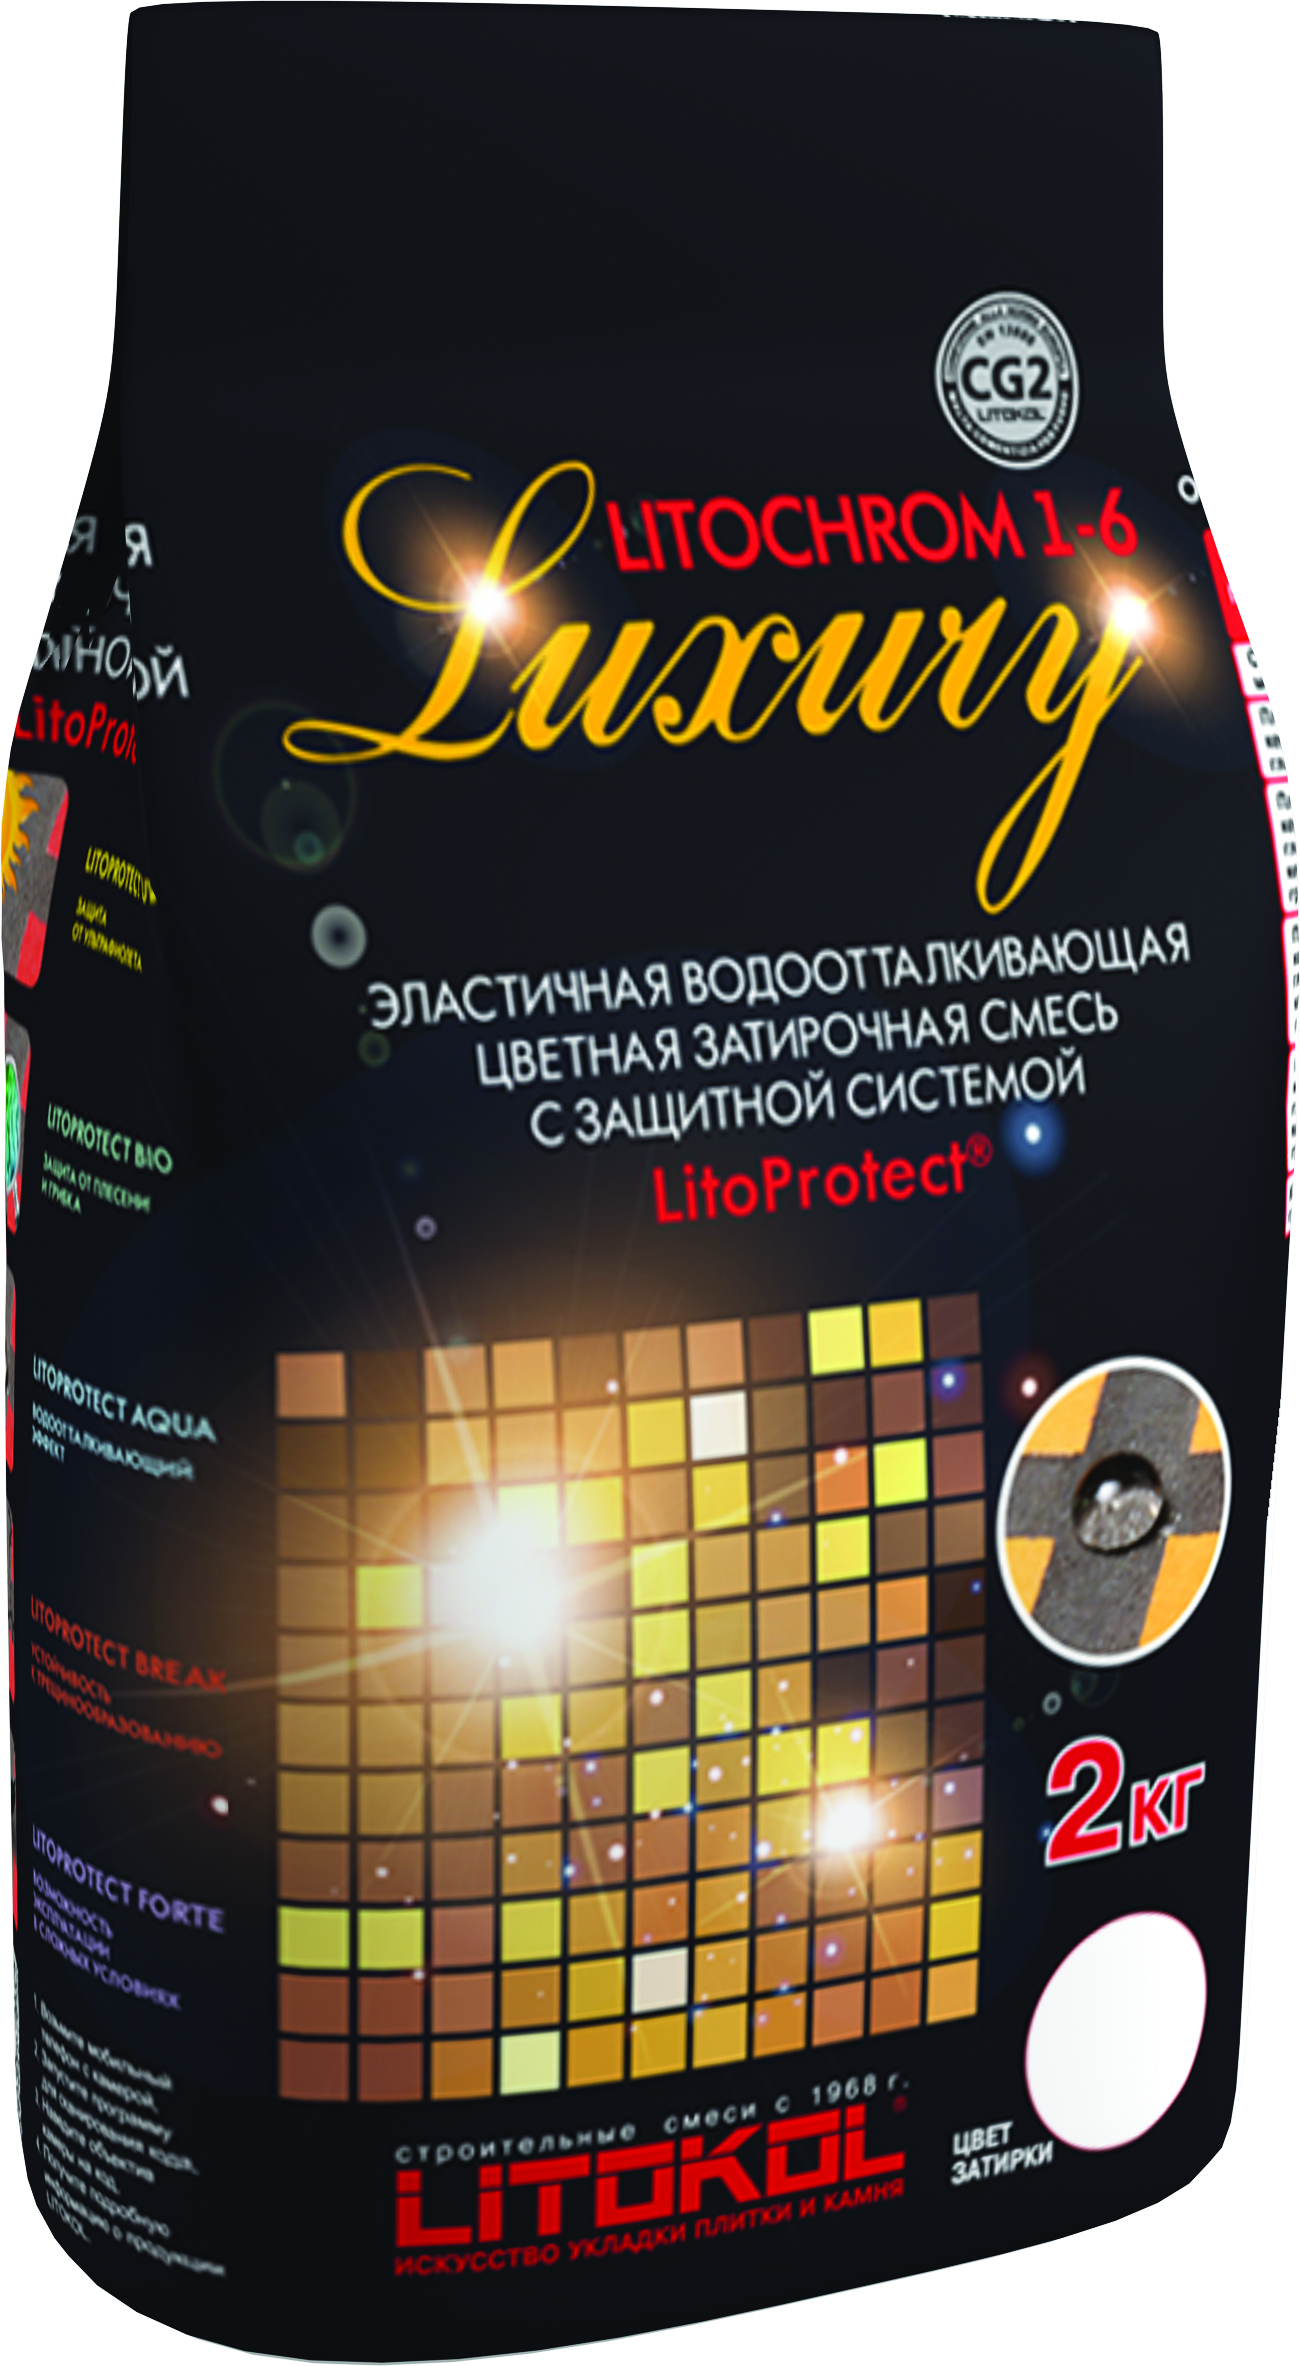 Купить Litokol Litochrom 1-6 Luxury C.10, 2 кг